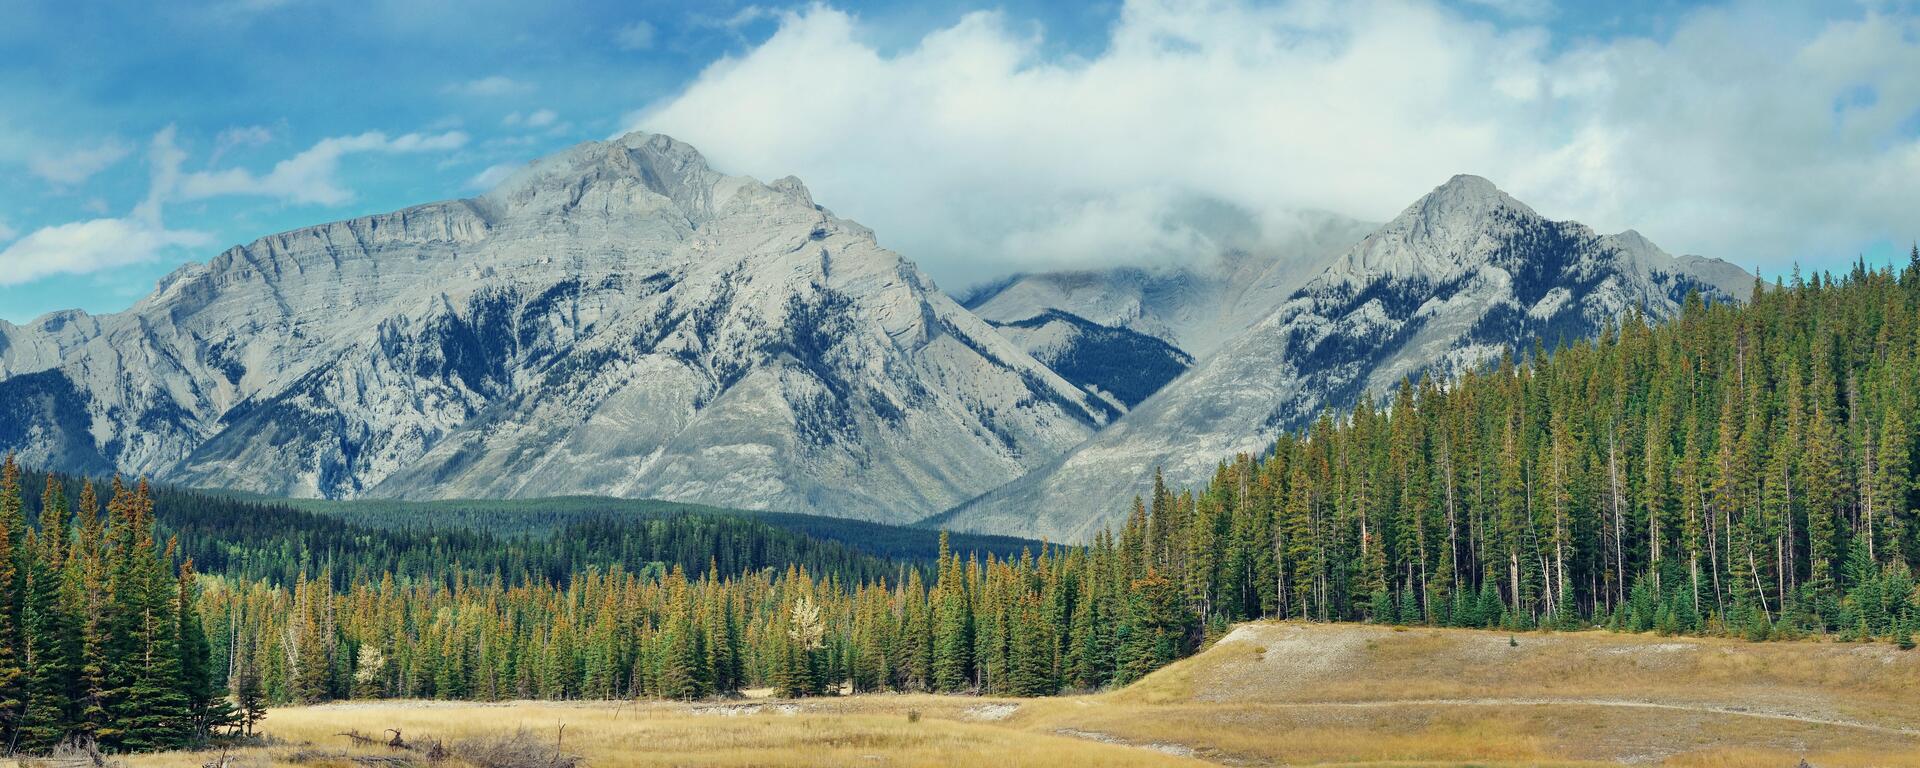 Mountain landscape of Alberta